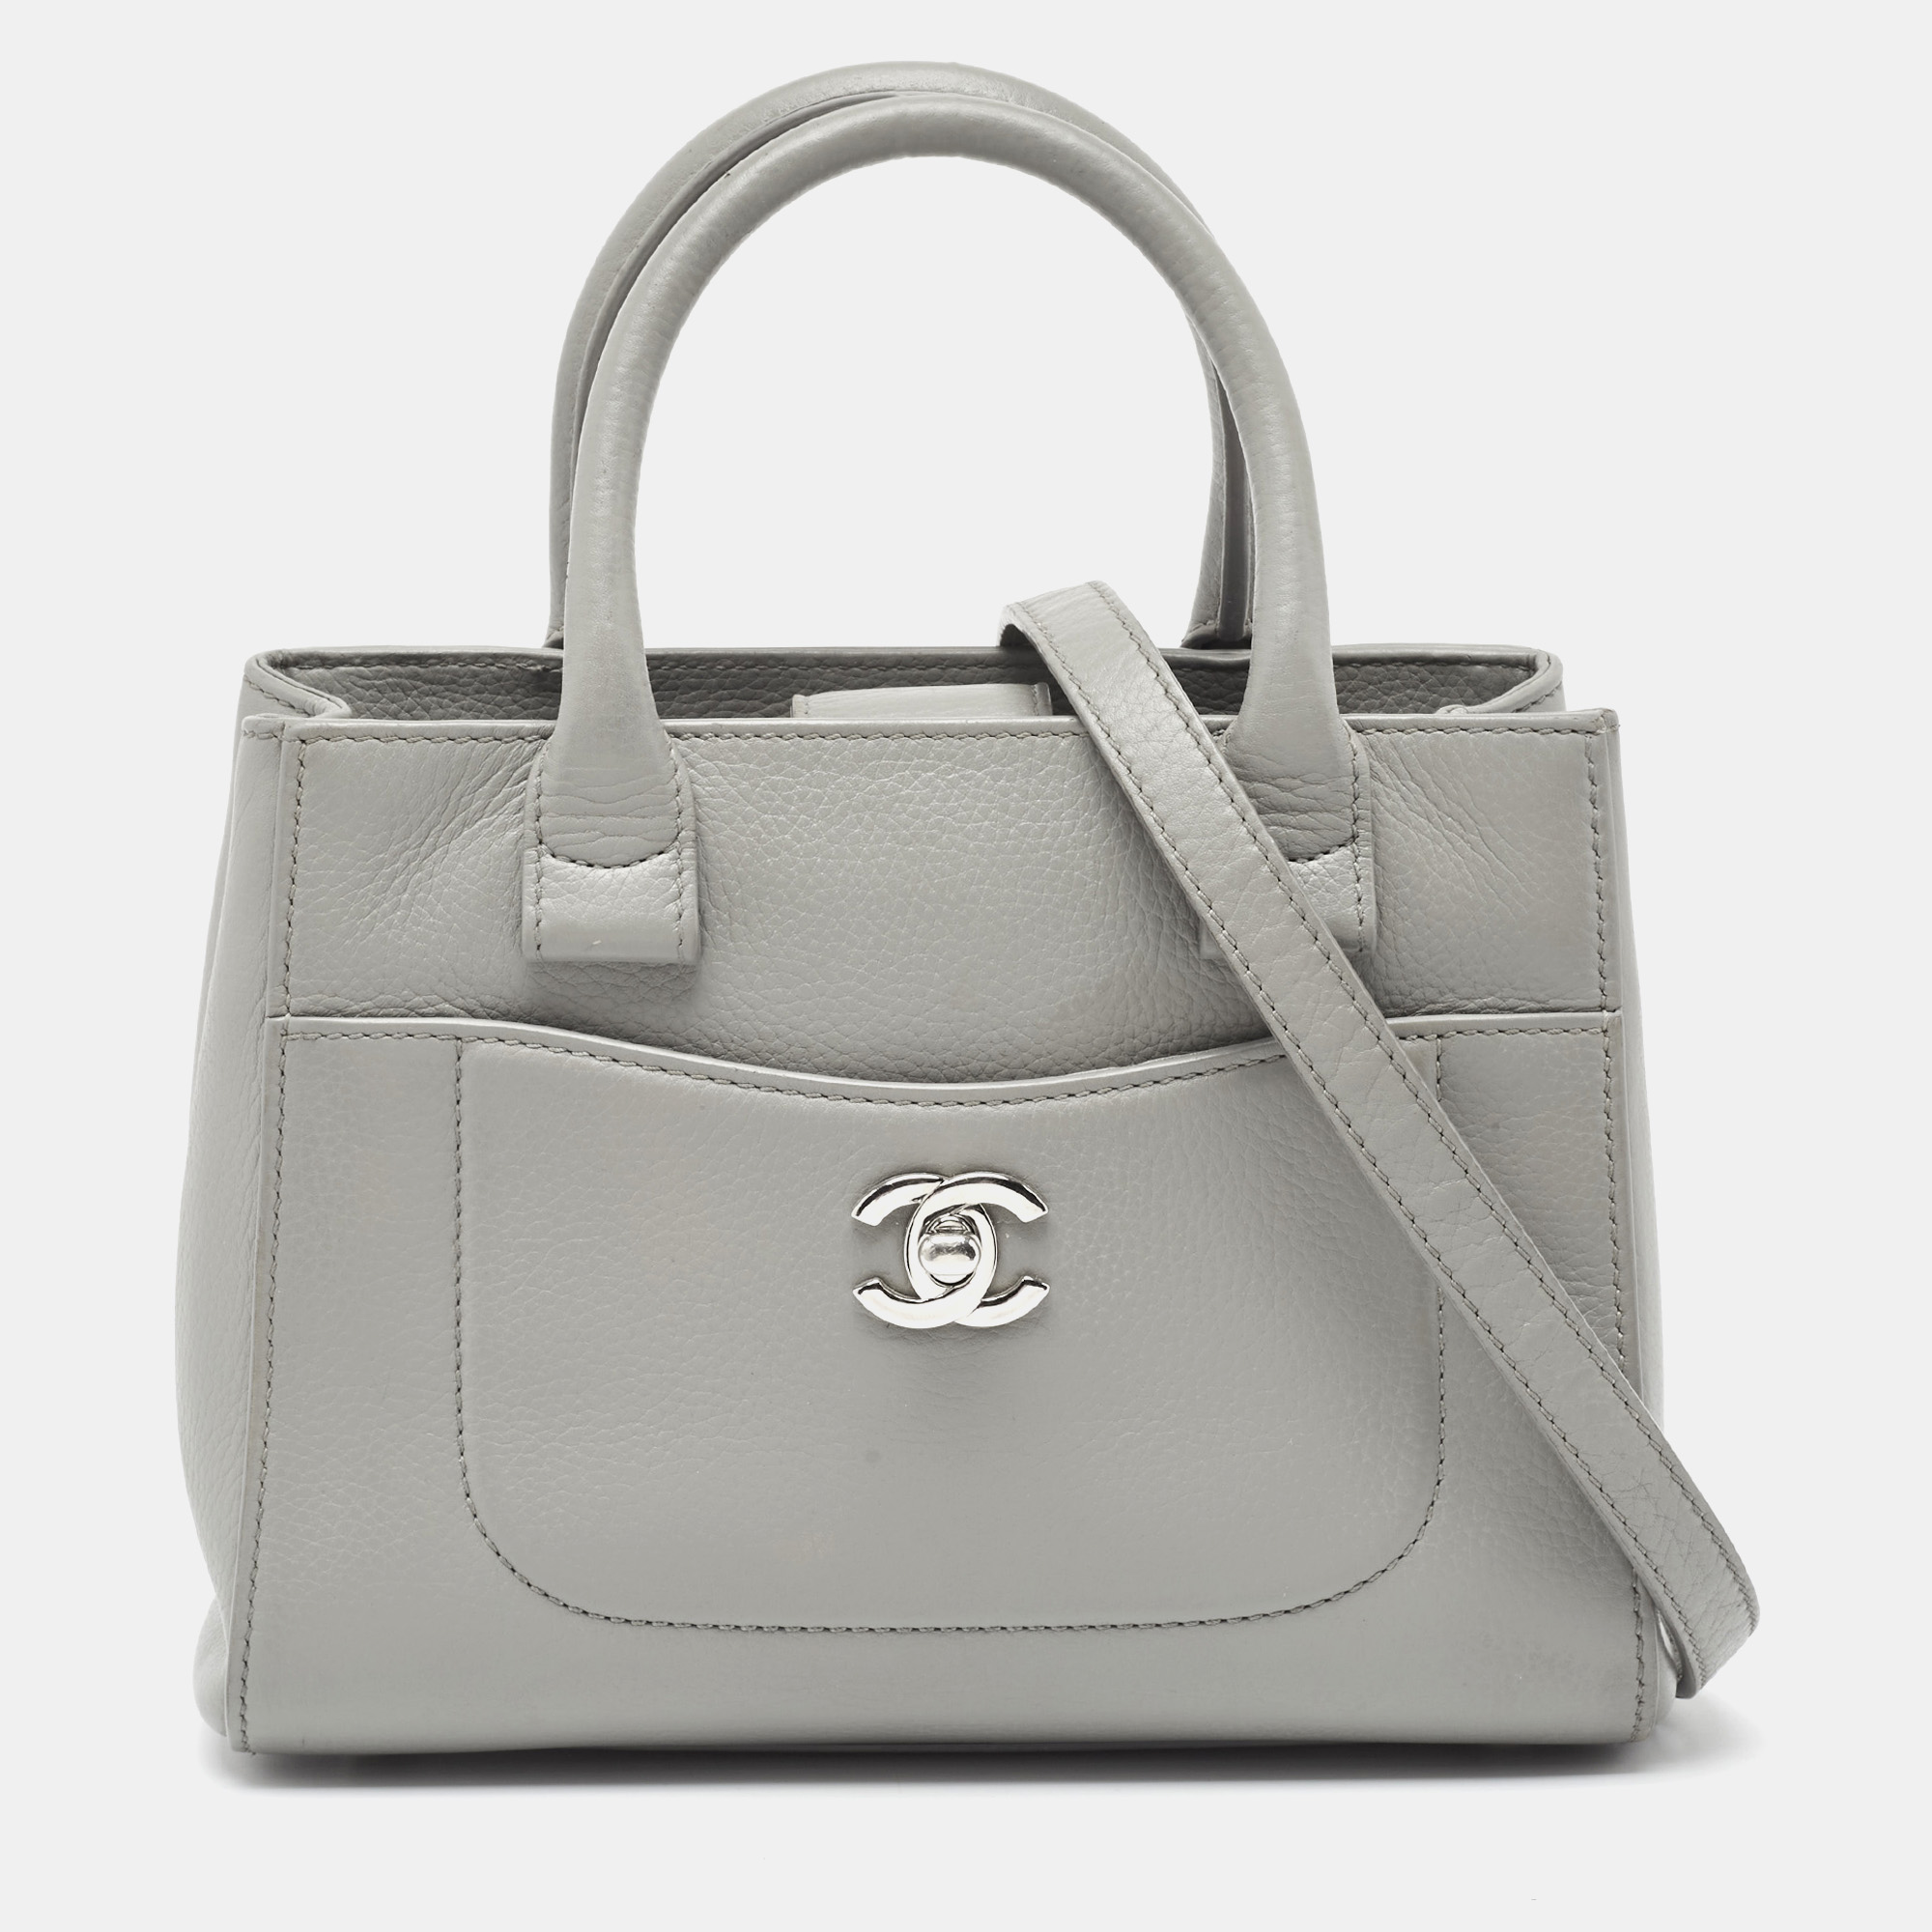 Chanel grey leather mini neo executive shopping tote